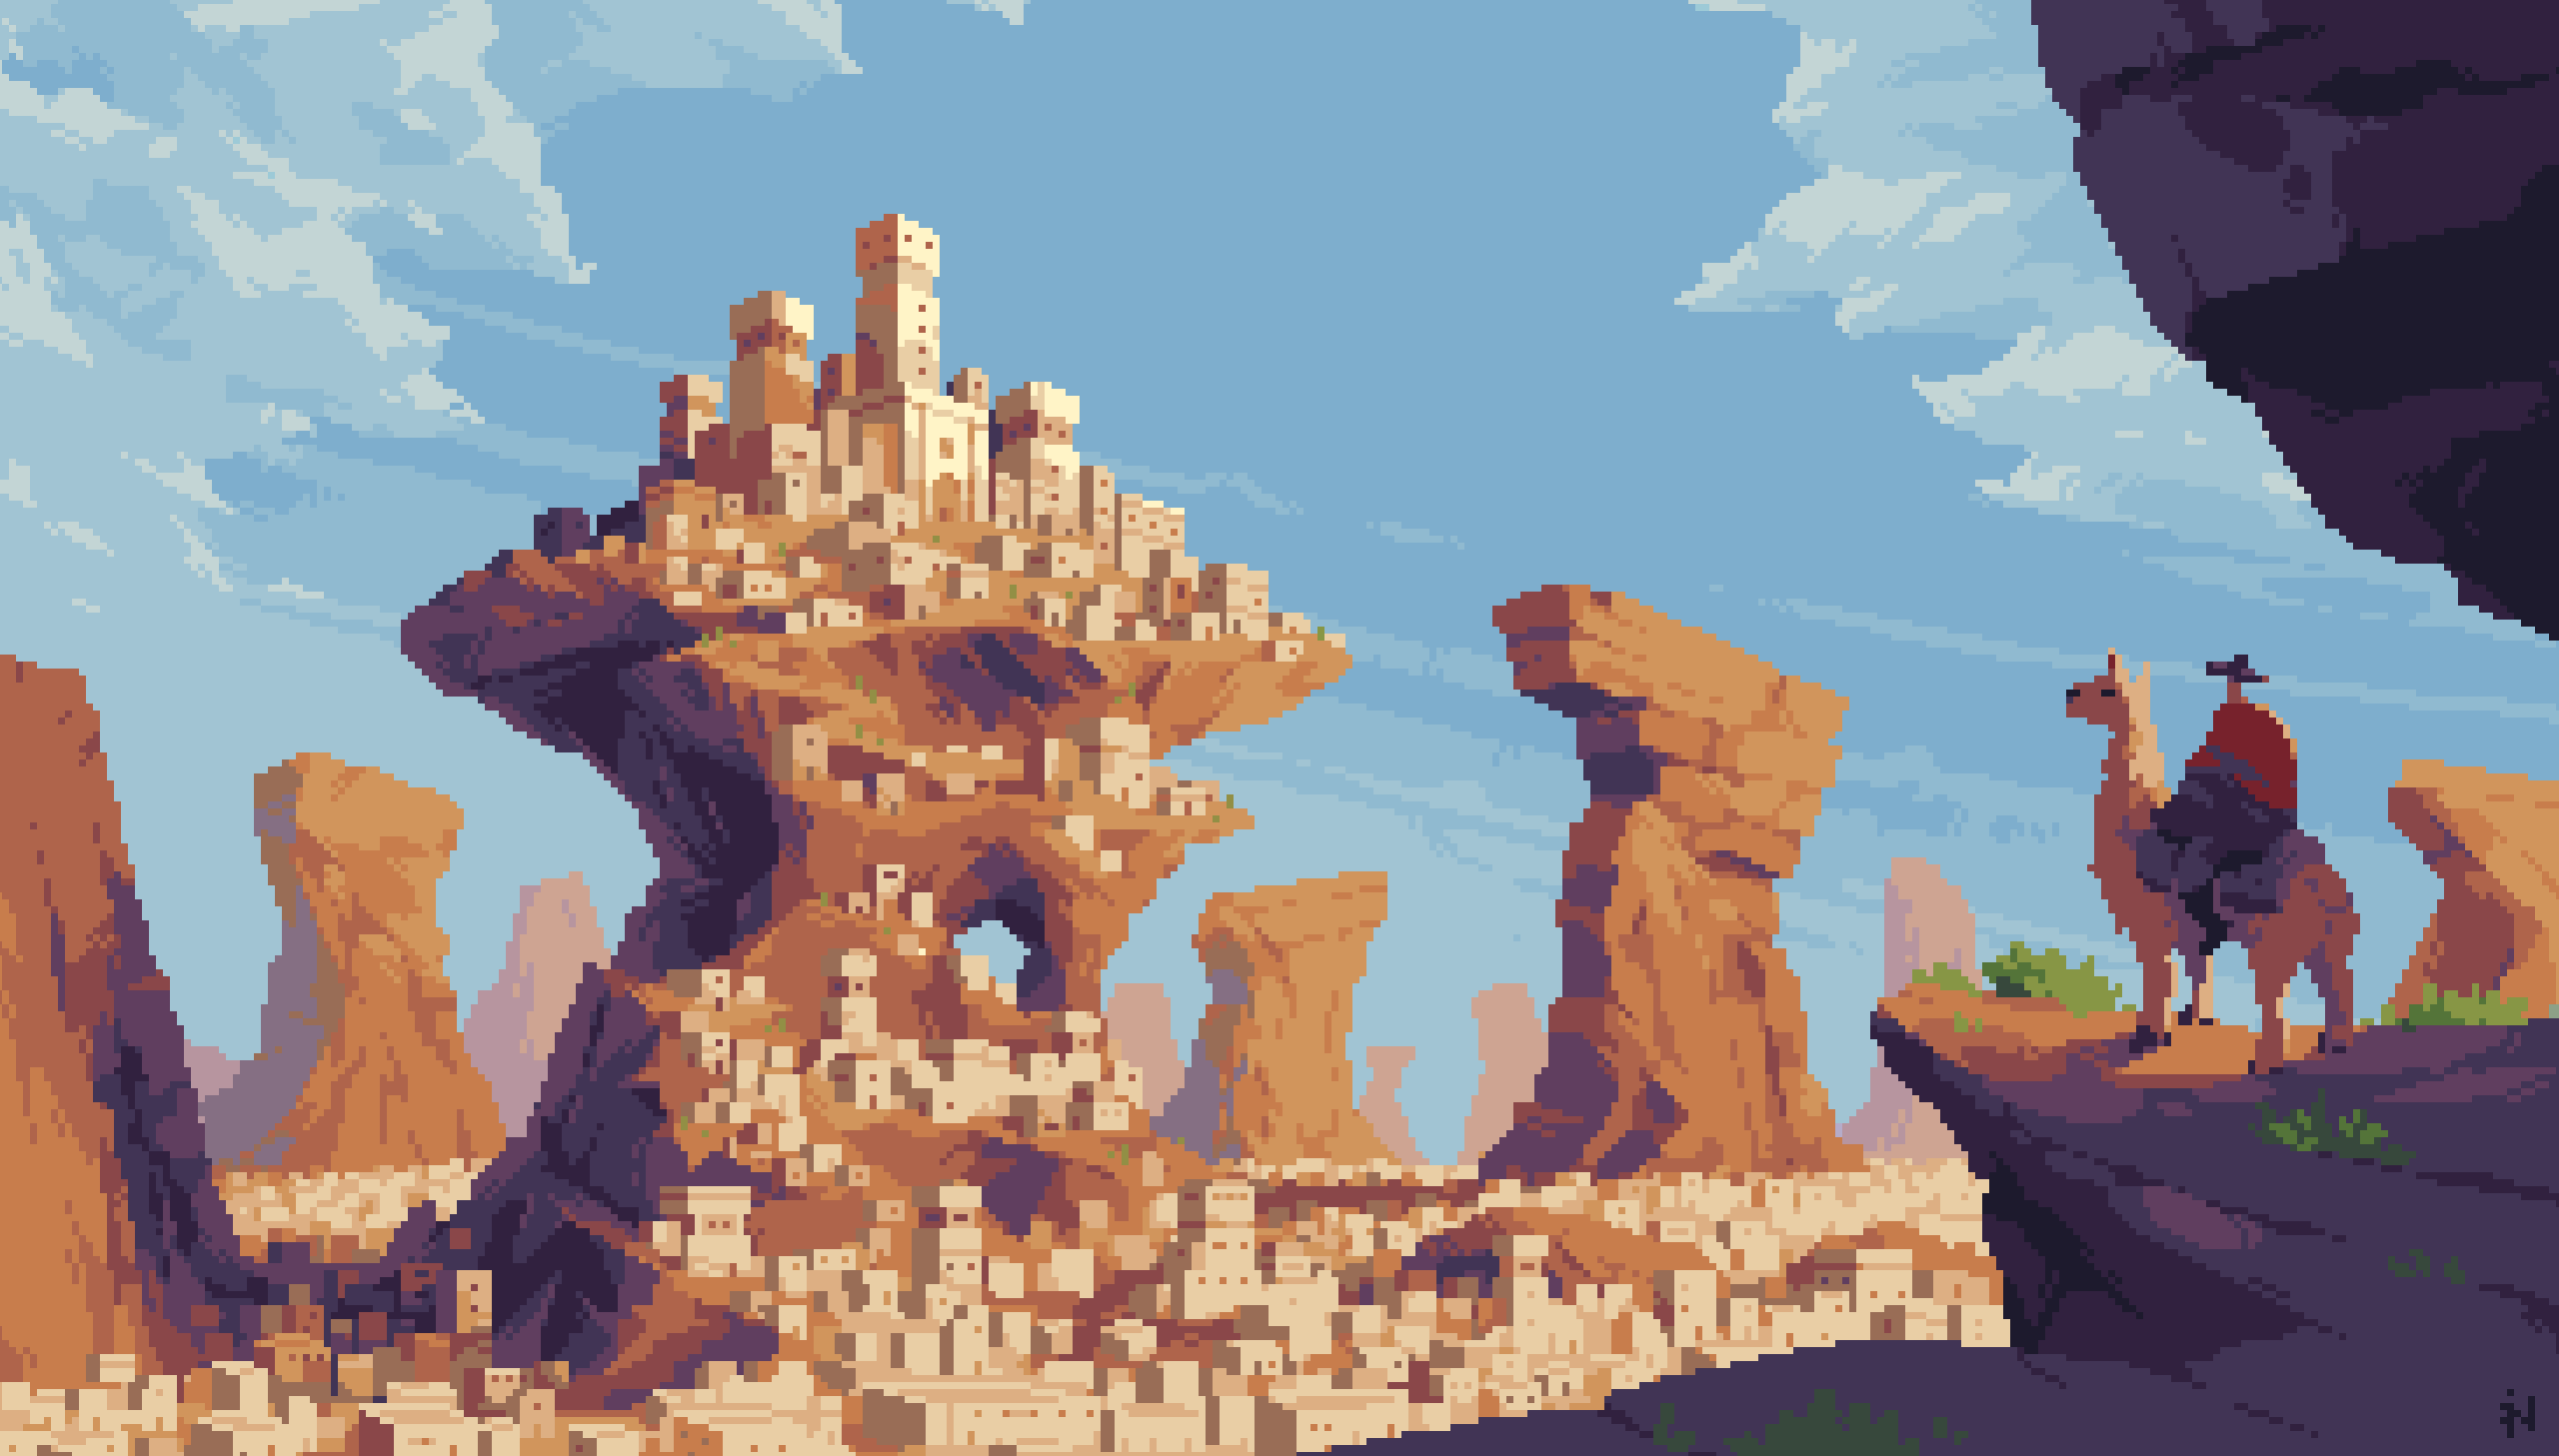 Digital Art Pixel Art Pixelated Pixels Llamas Mountains Rock Rock Formation Cowboy Village Tower Hou 2560x1457